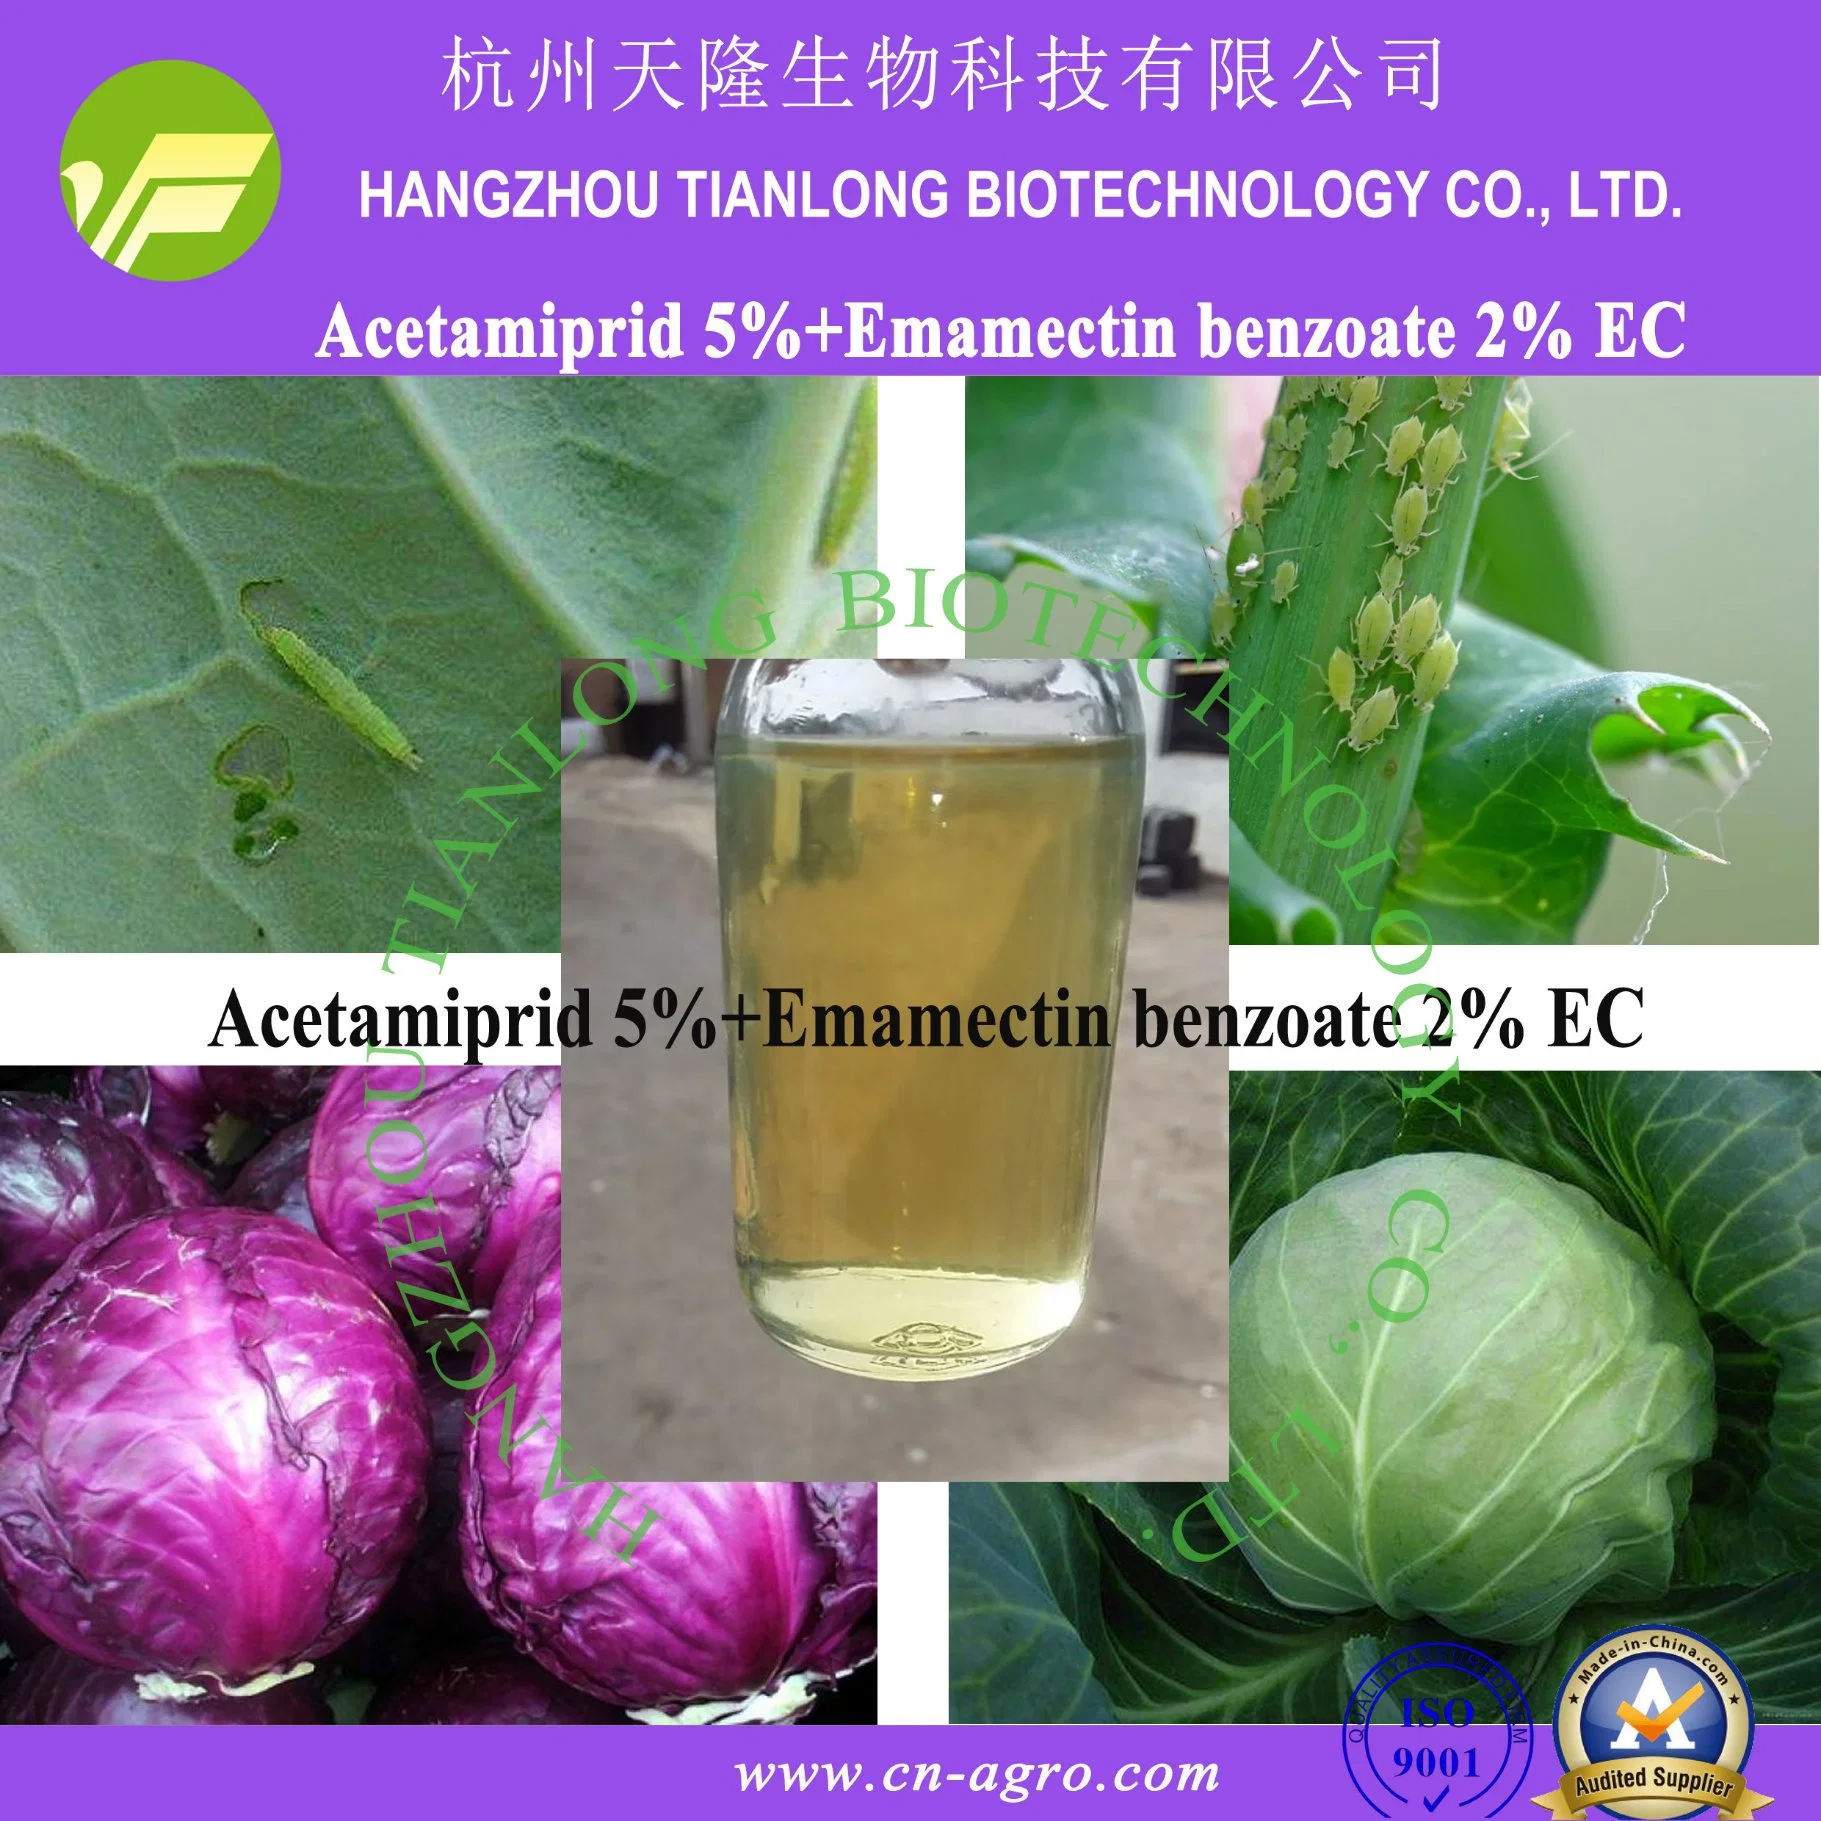 Acetamiprid 5%+Emamectin Benzoat 2%EC-Acetamiprid+Emamectin Benzoat (5%+2%)-Insektizid-Gemisch